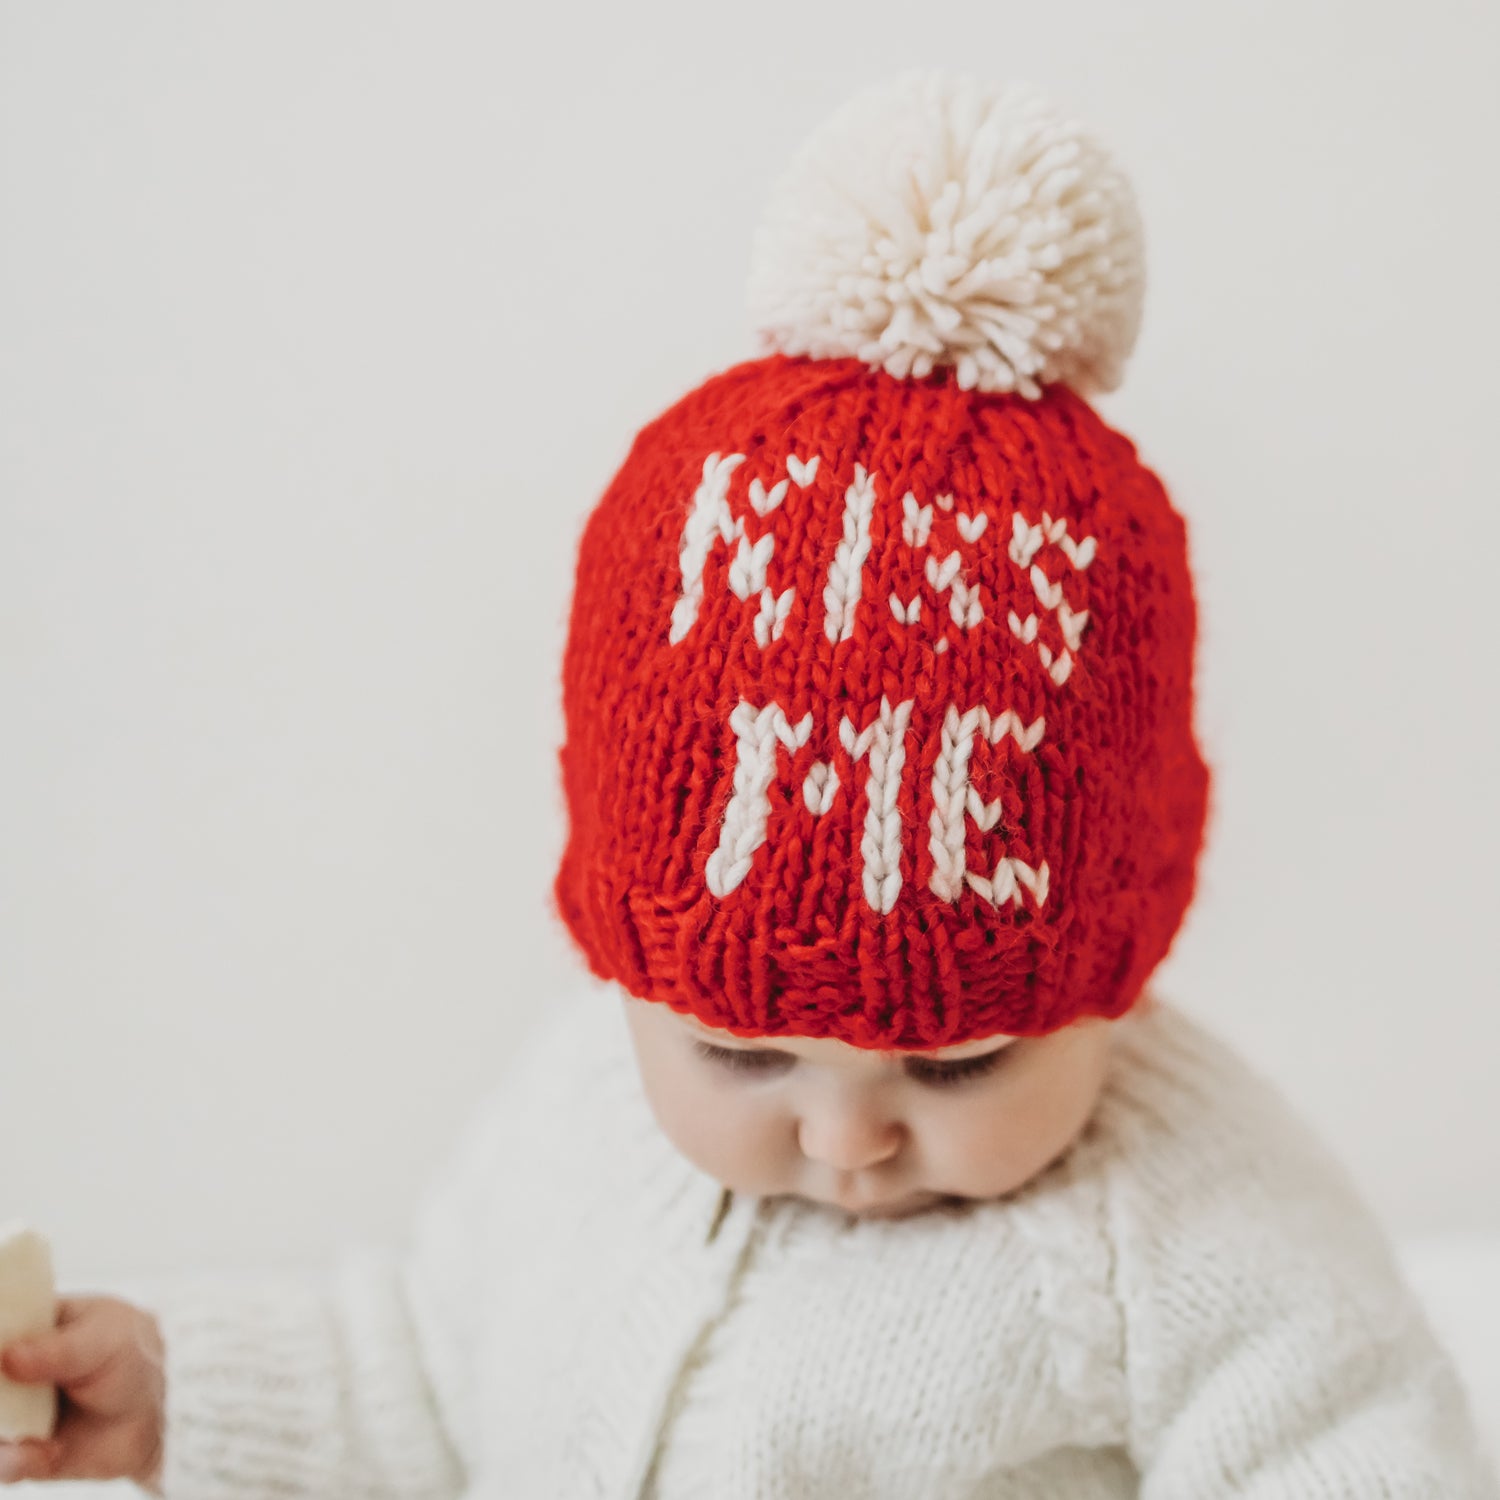 Kiss Me Valentine Knit Beanie Hat Ships 12/1-12/30 - Beanie Hats